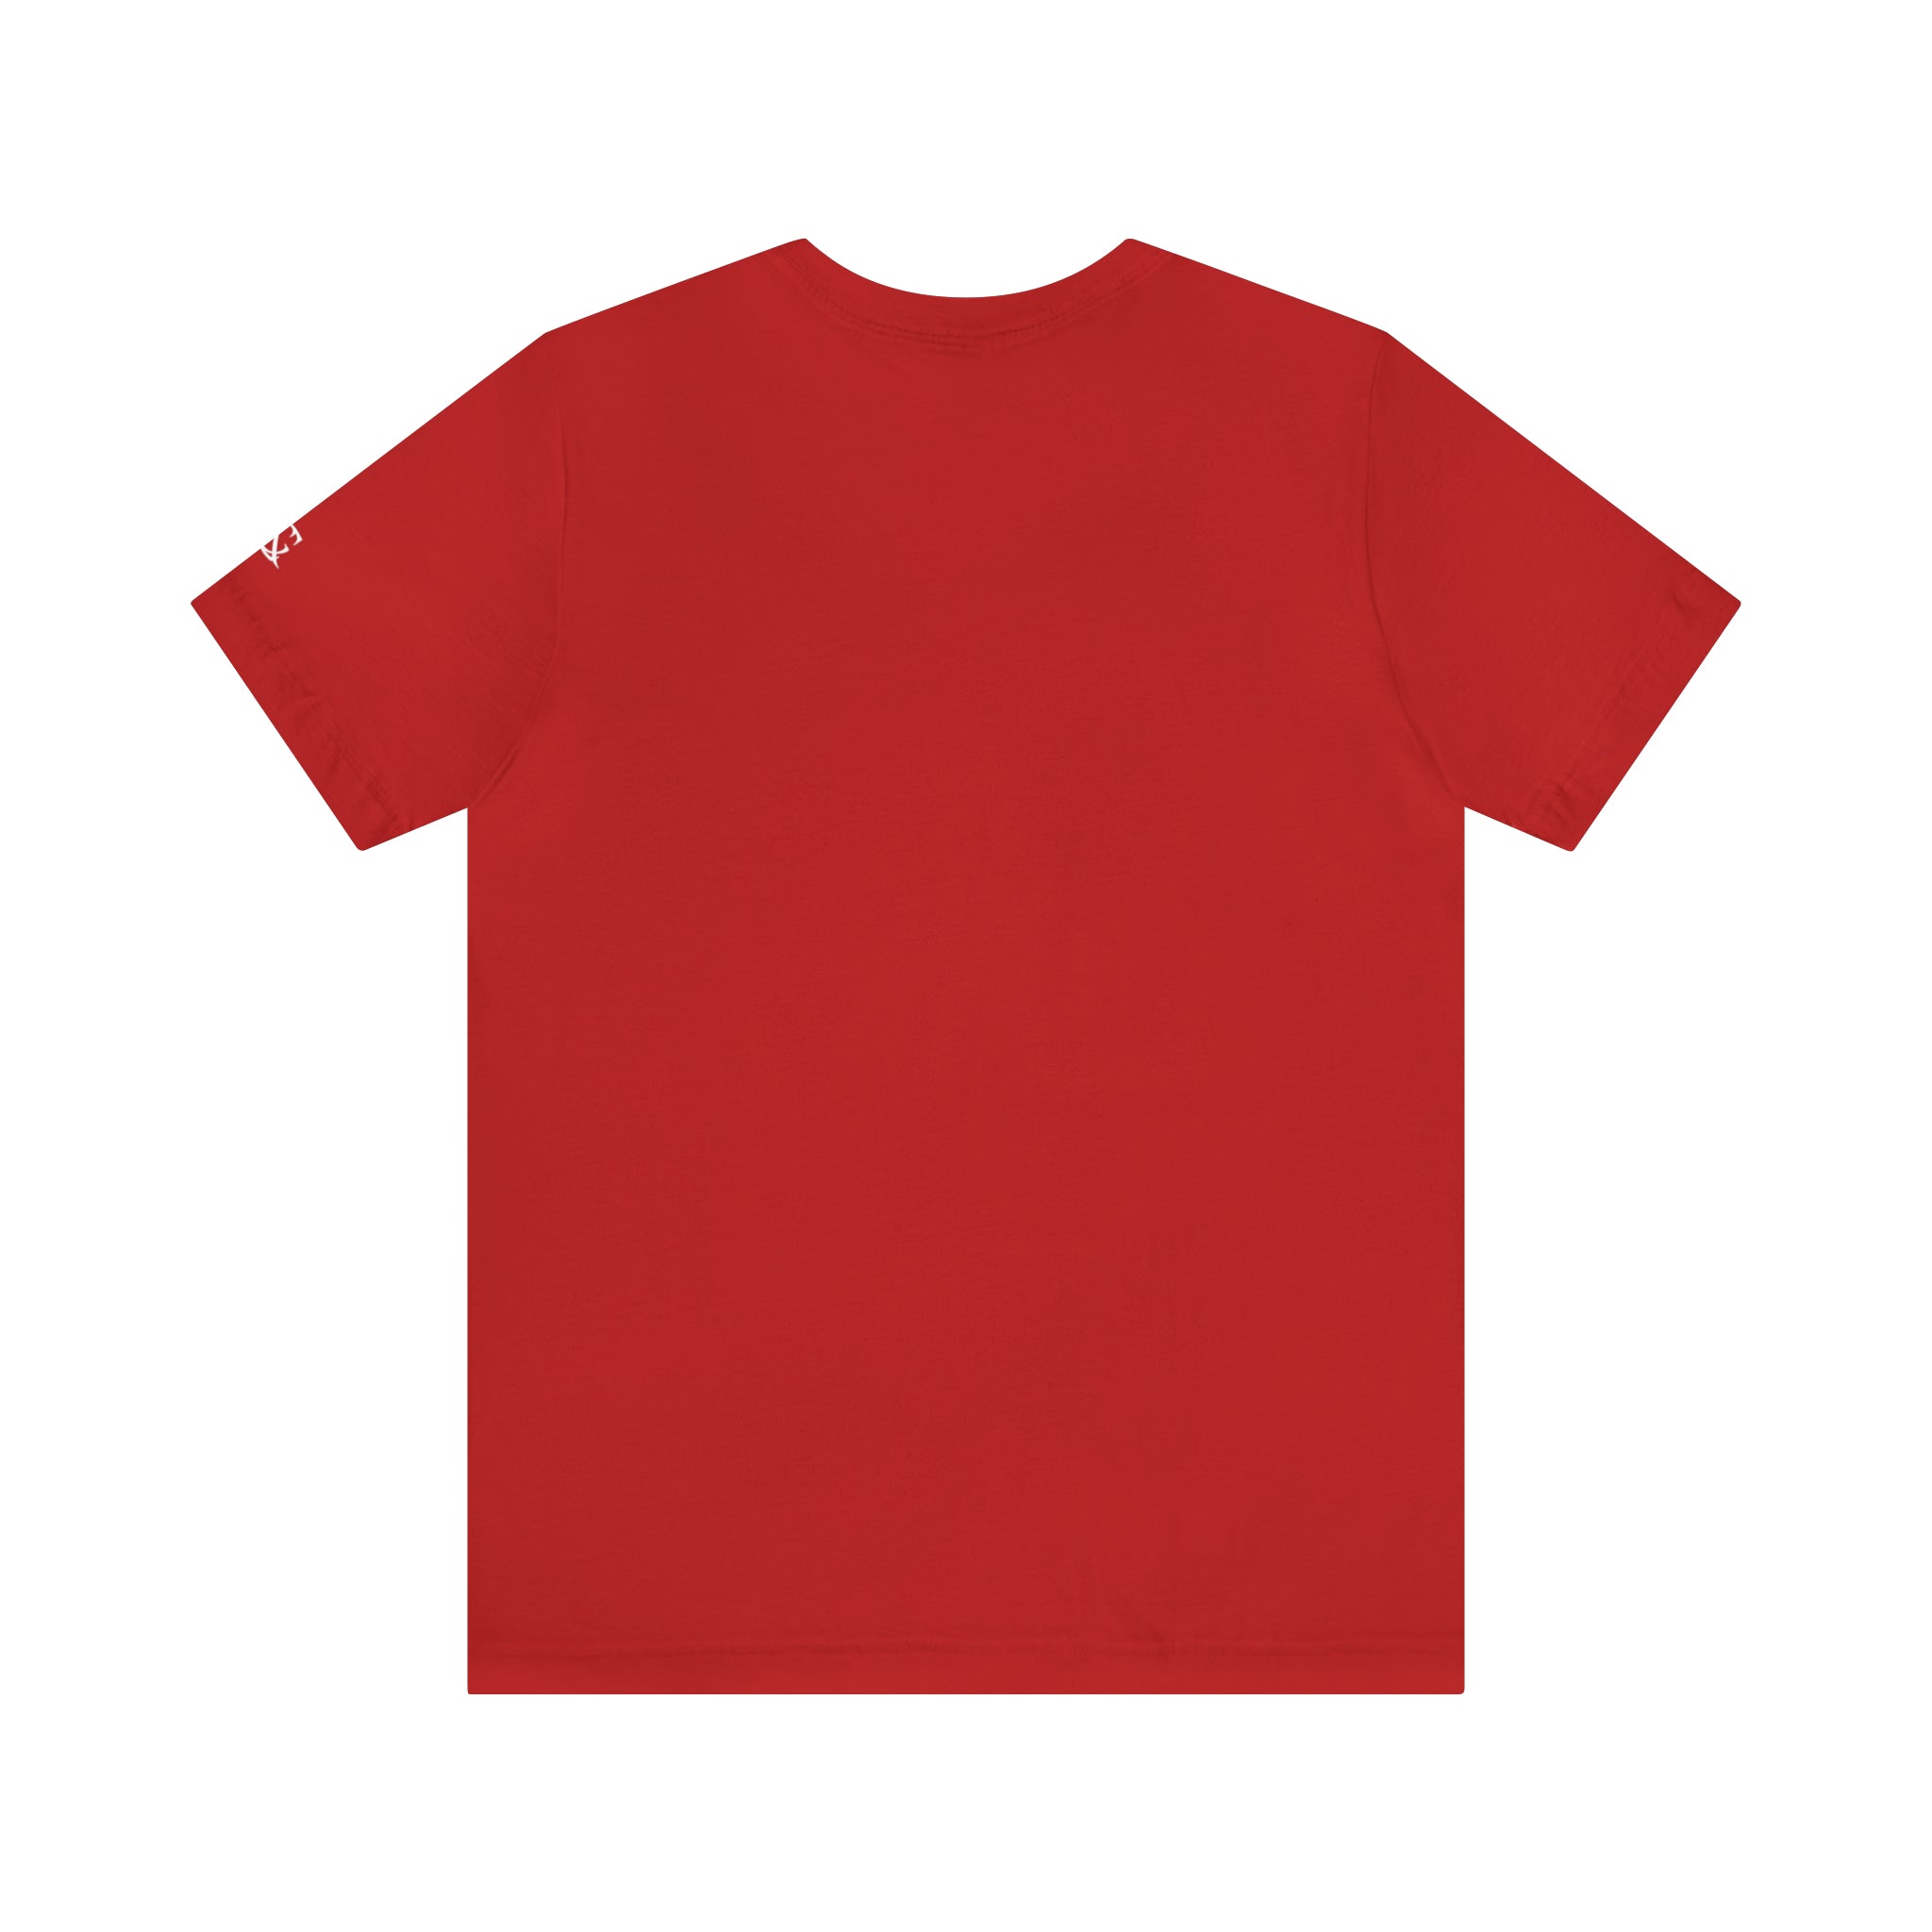 Customoi Star Lys Unisex Jersey Short Sleeve T-Shirt